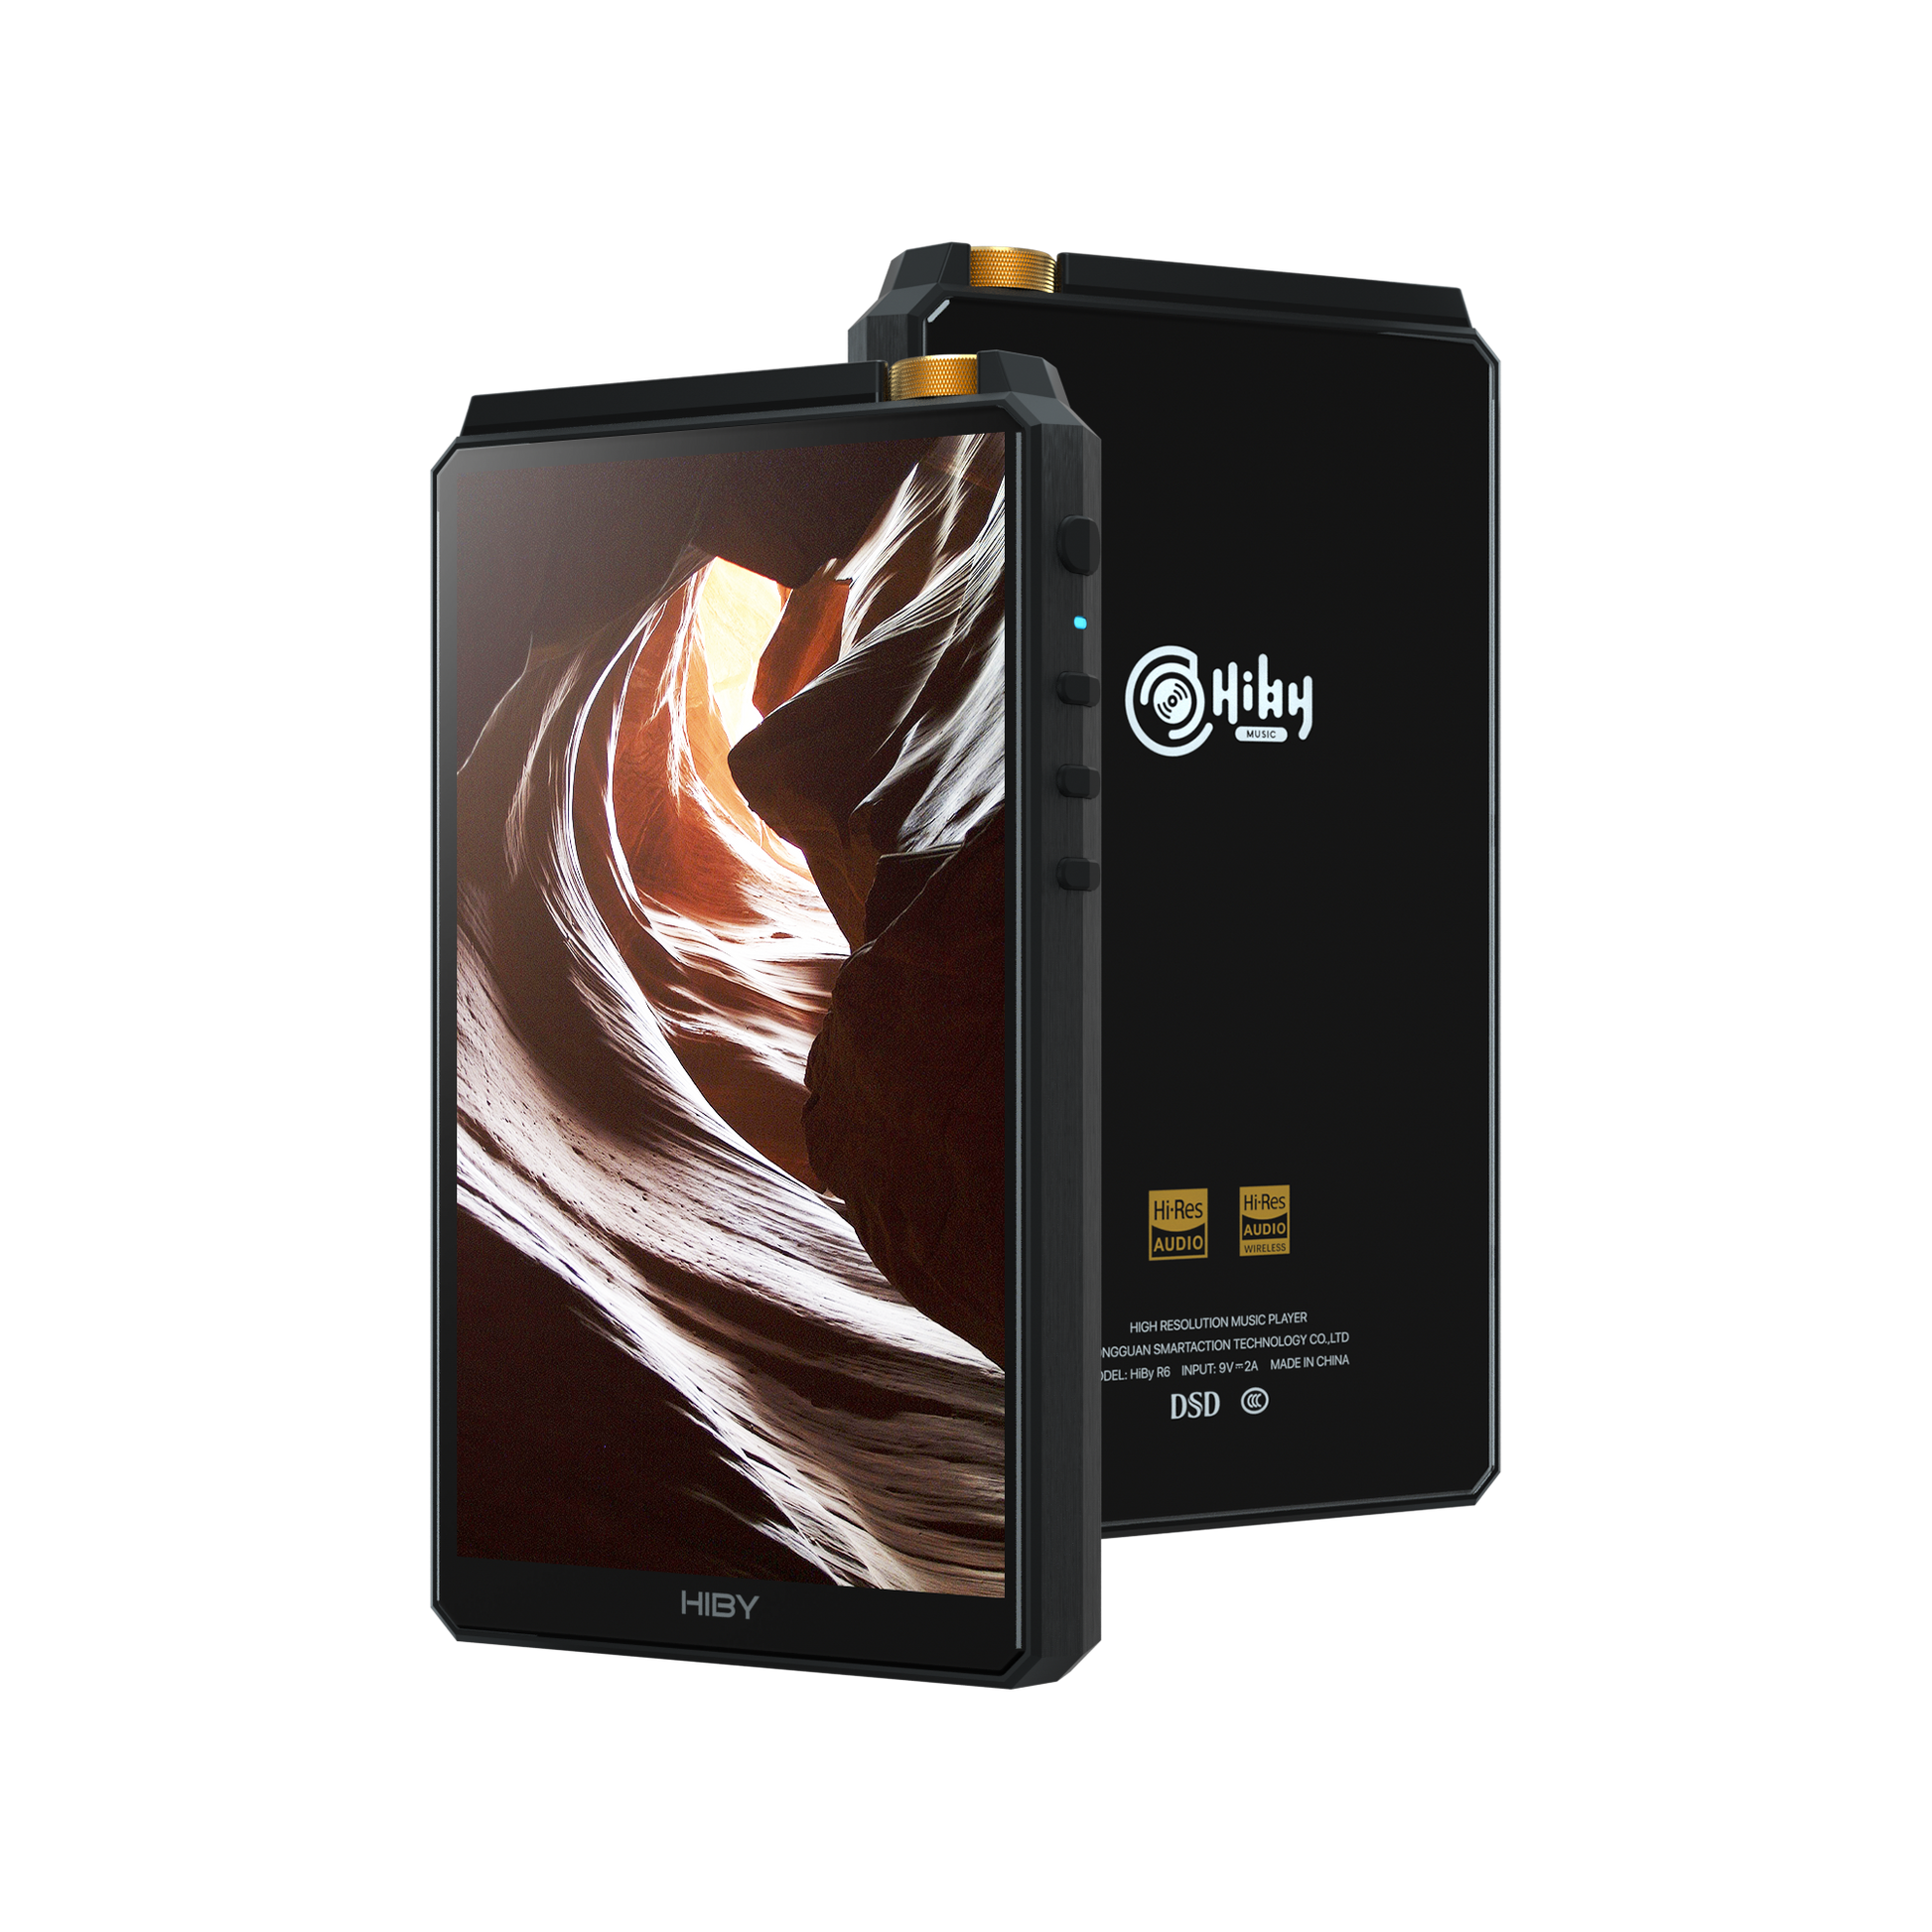 HiBy New R6 Hi-Res Portable Audio Player Medium-end Android DAP HiBy | Make Music More Musical Aluminumalloyblack